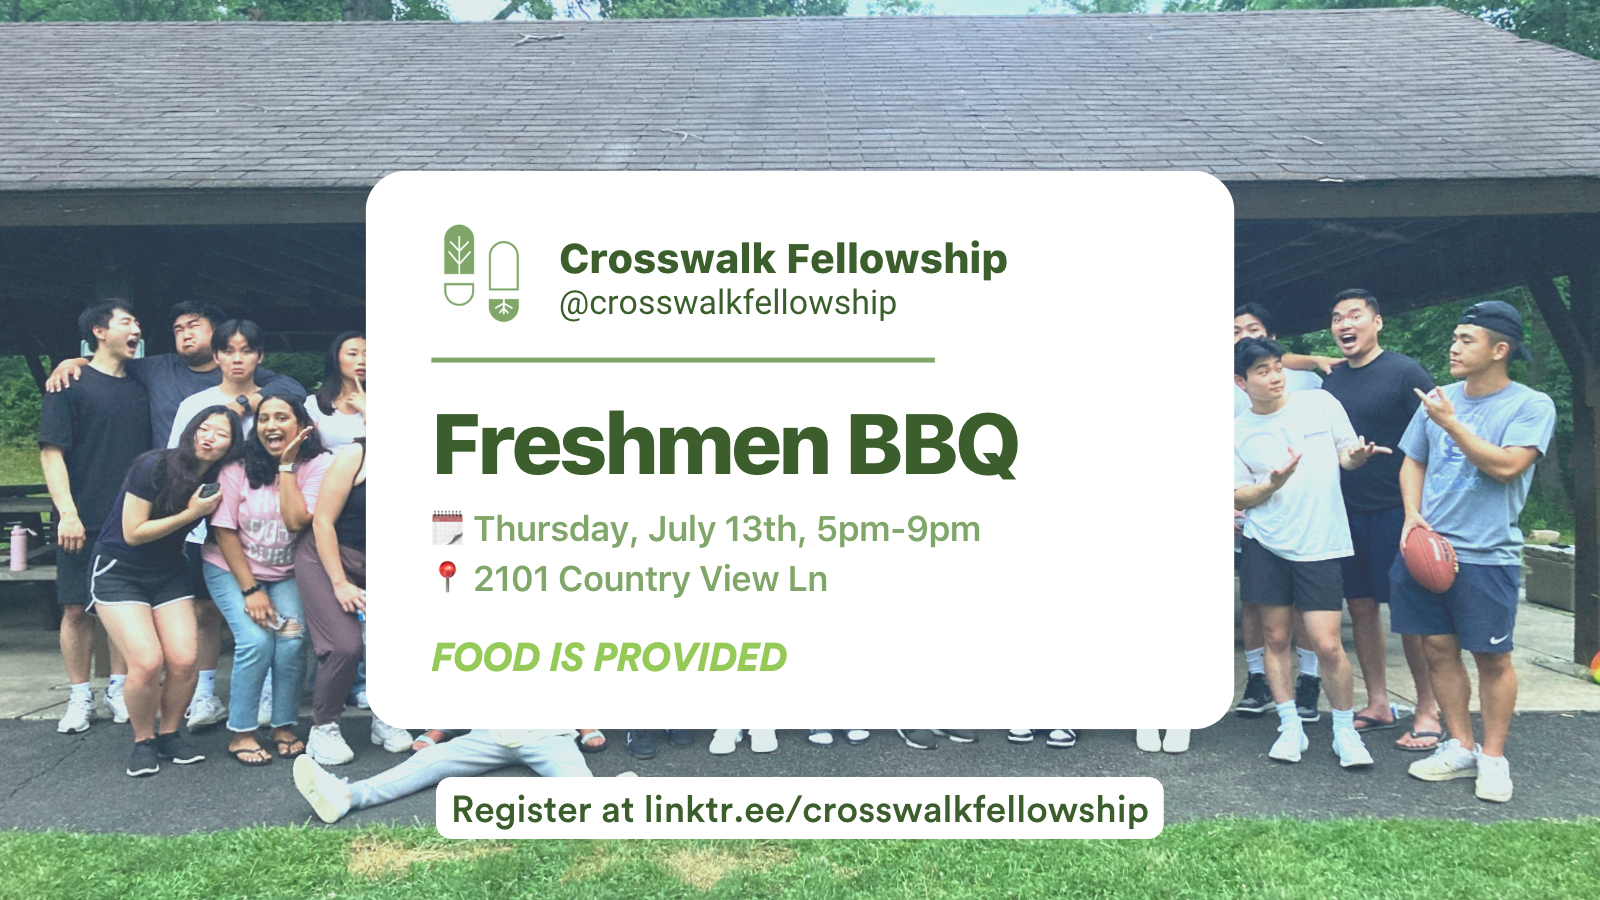 Crosswalk Fellowship's "Freshmen BBQ"